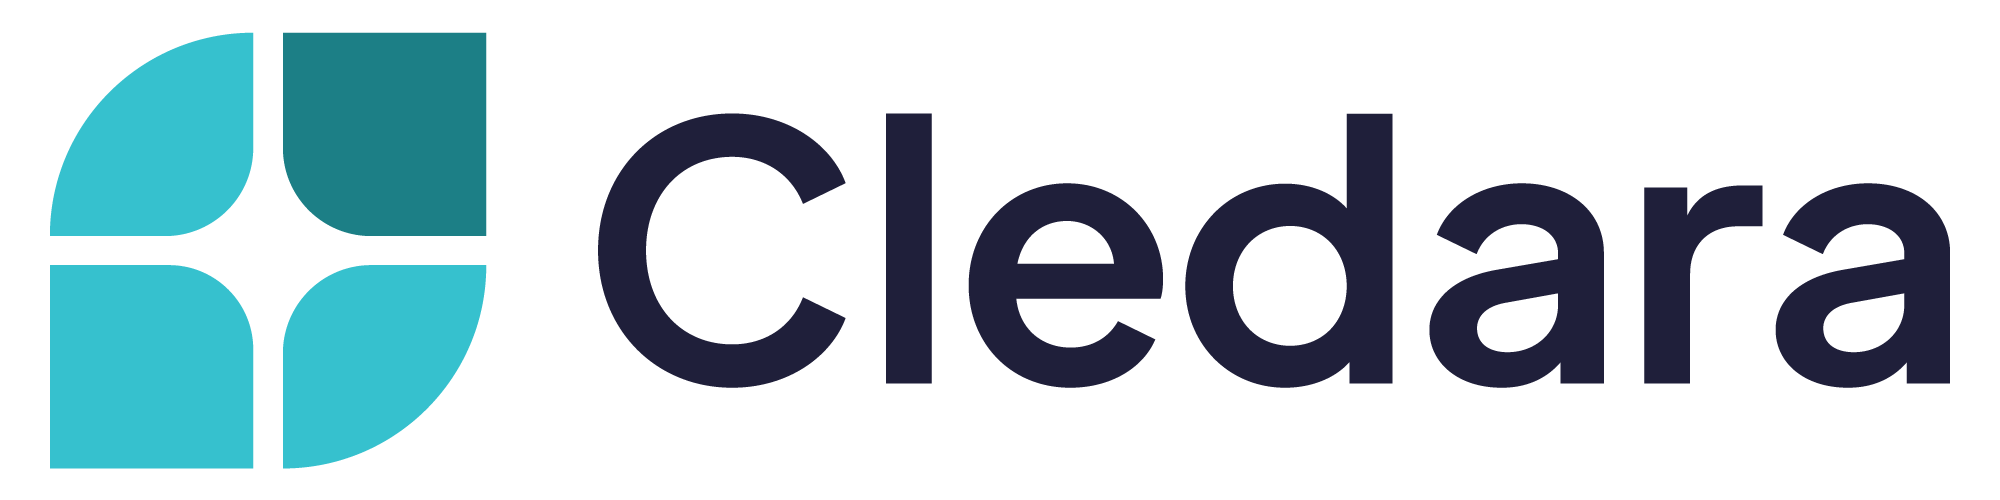 Cledara's logo